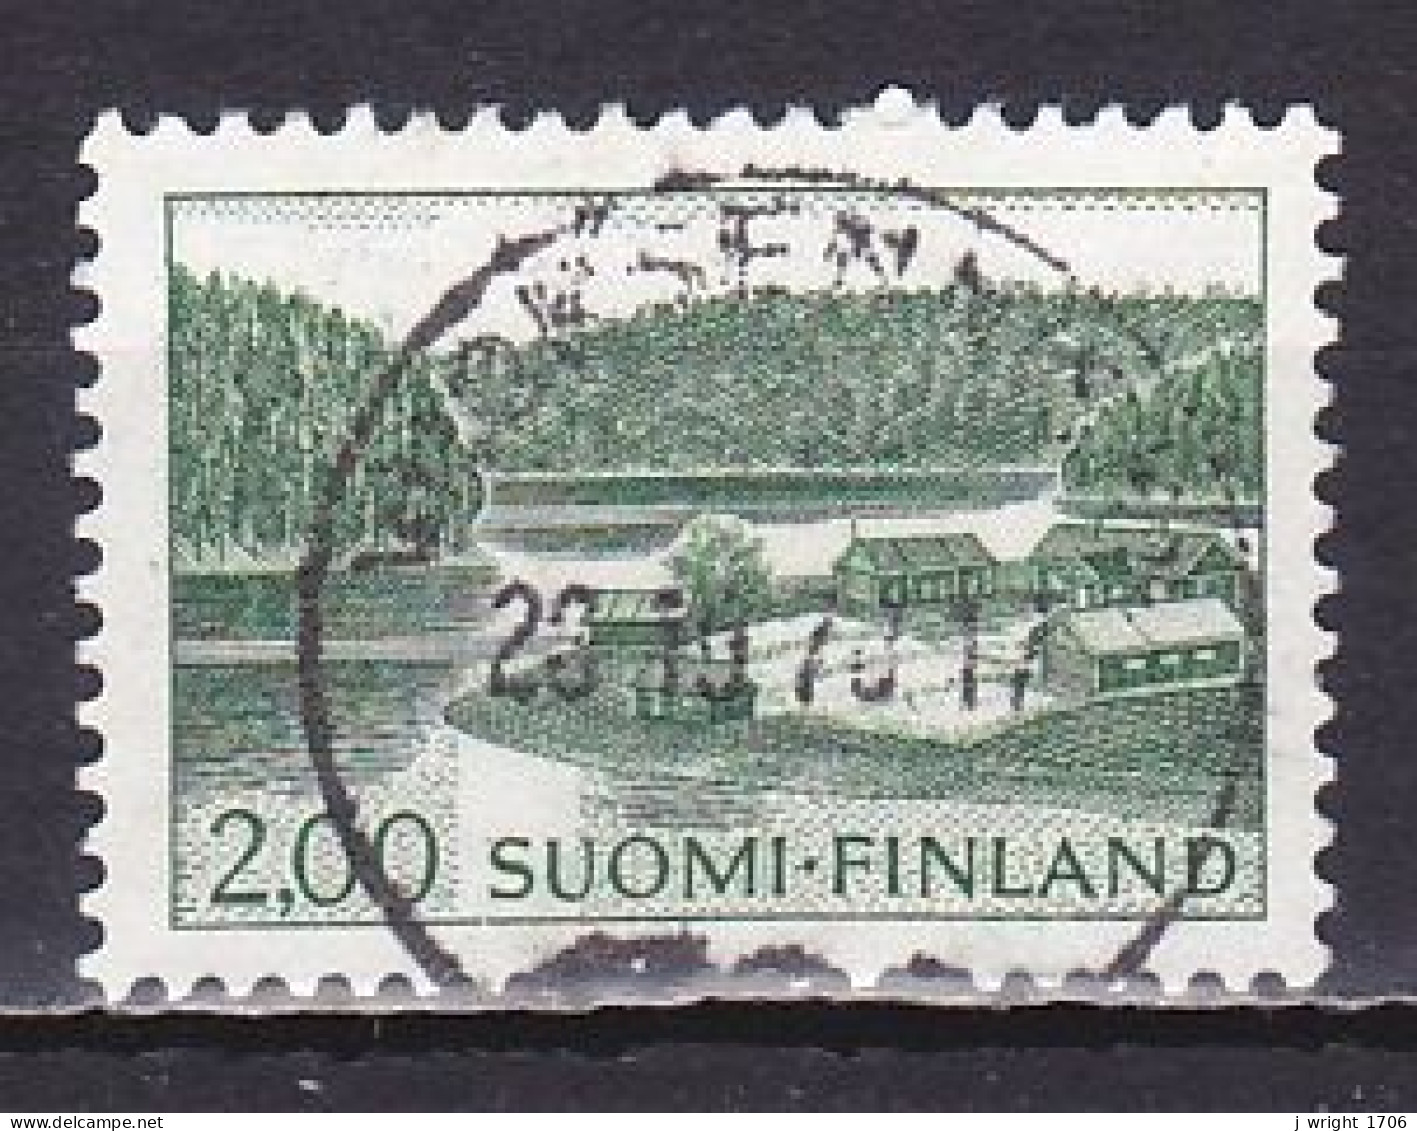 Finland, 1964, Lakeside Farm, 2.00mk, USED - Usados